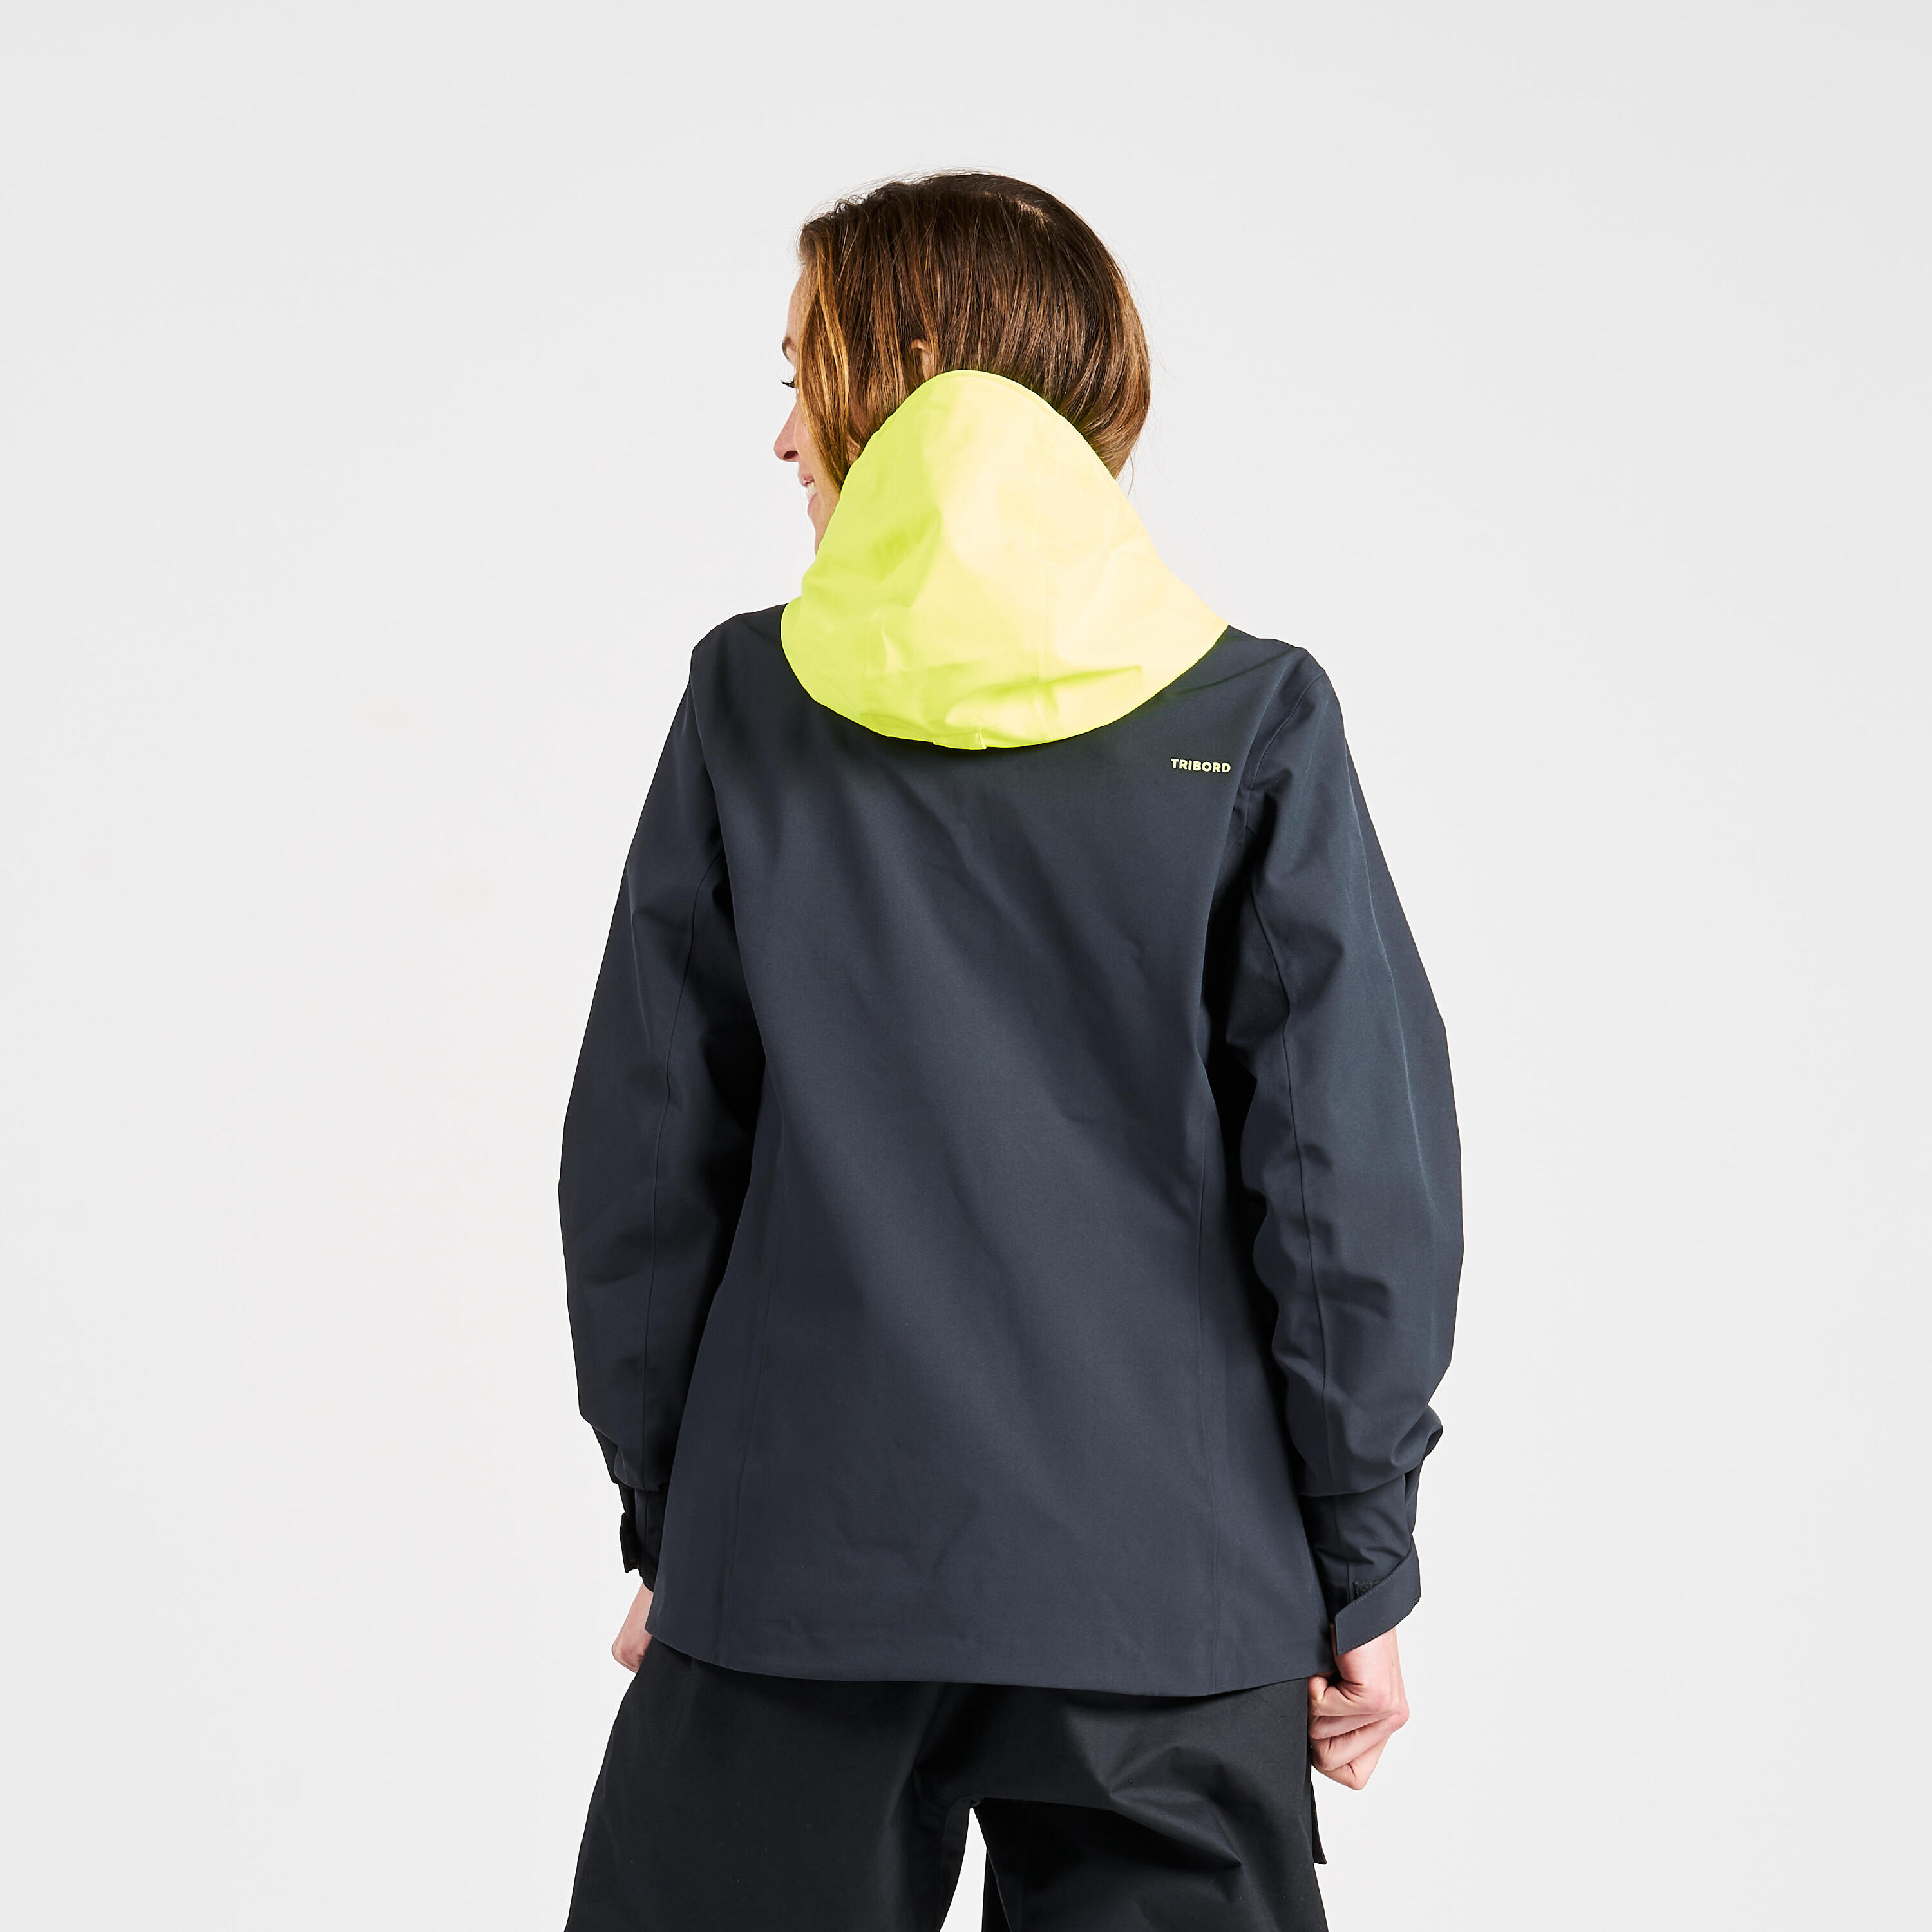 Women's sailing waterproof windproof jacket SAILING 300 - Dark grey Yellow hood 3/13